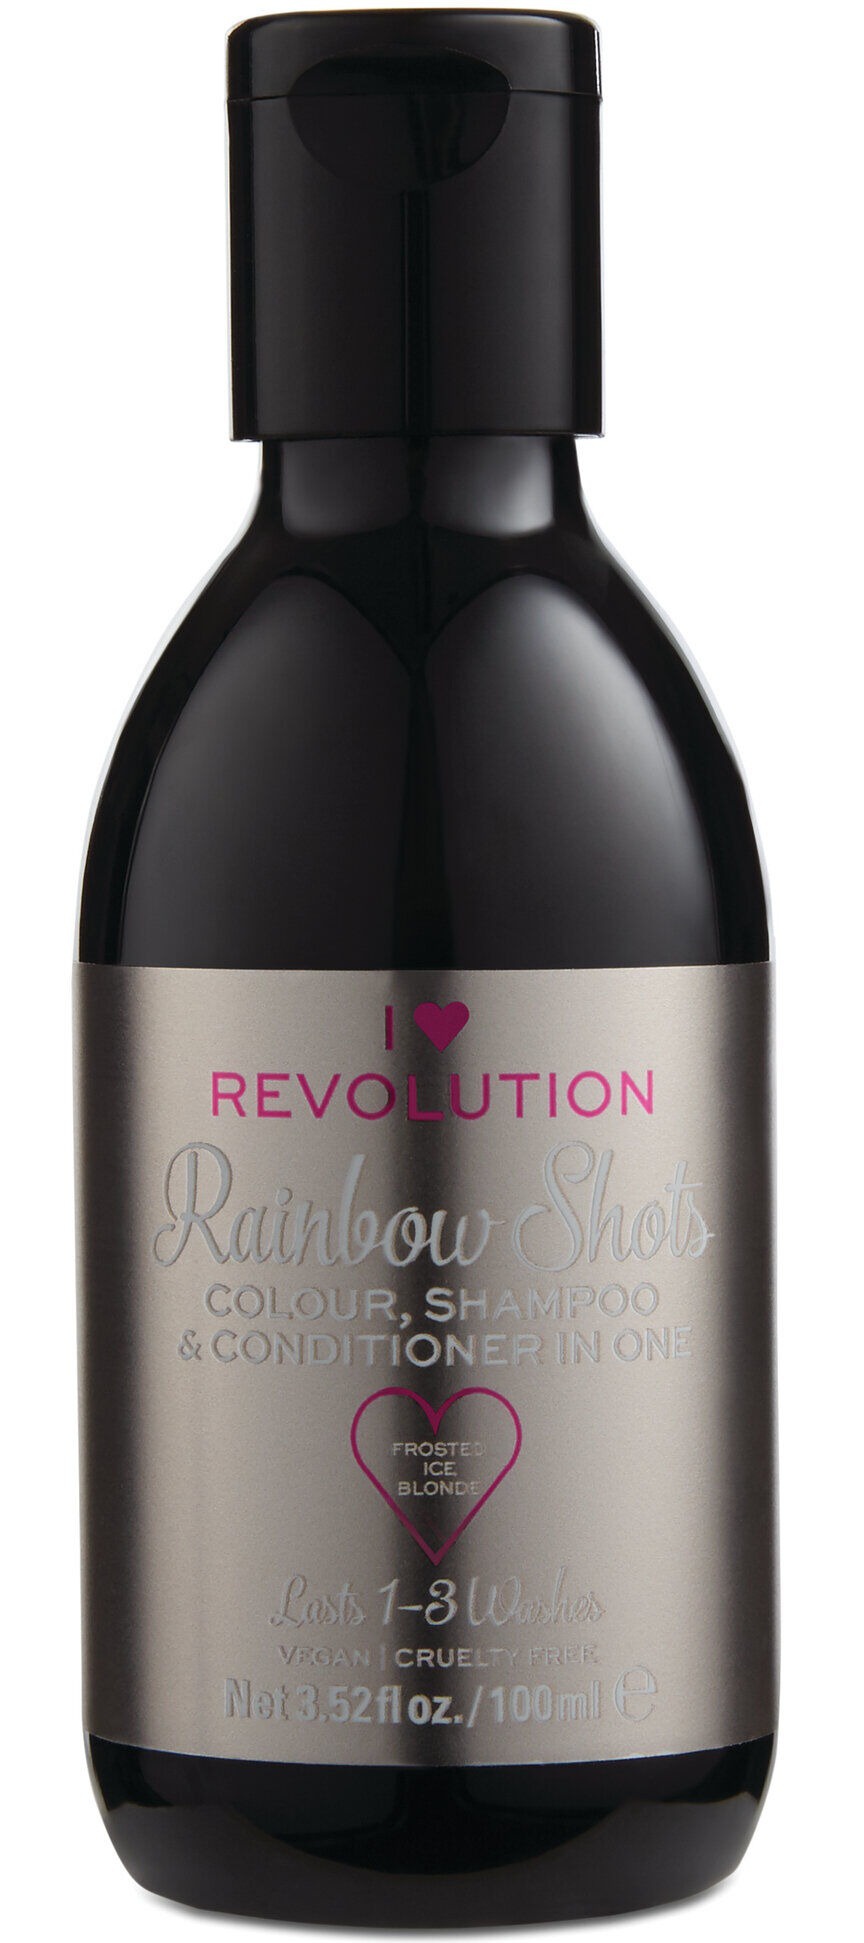 Revolution I Heart Revolution Rainbow Shots Frosted Ice Blonde